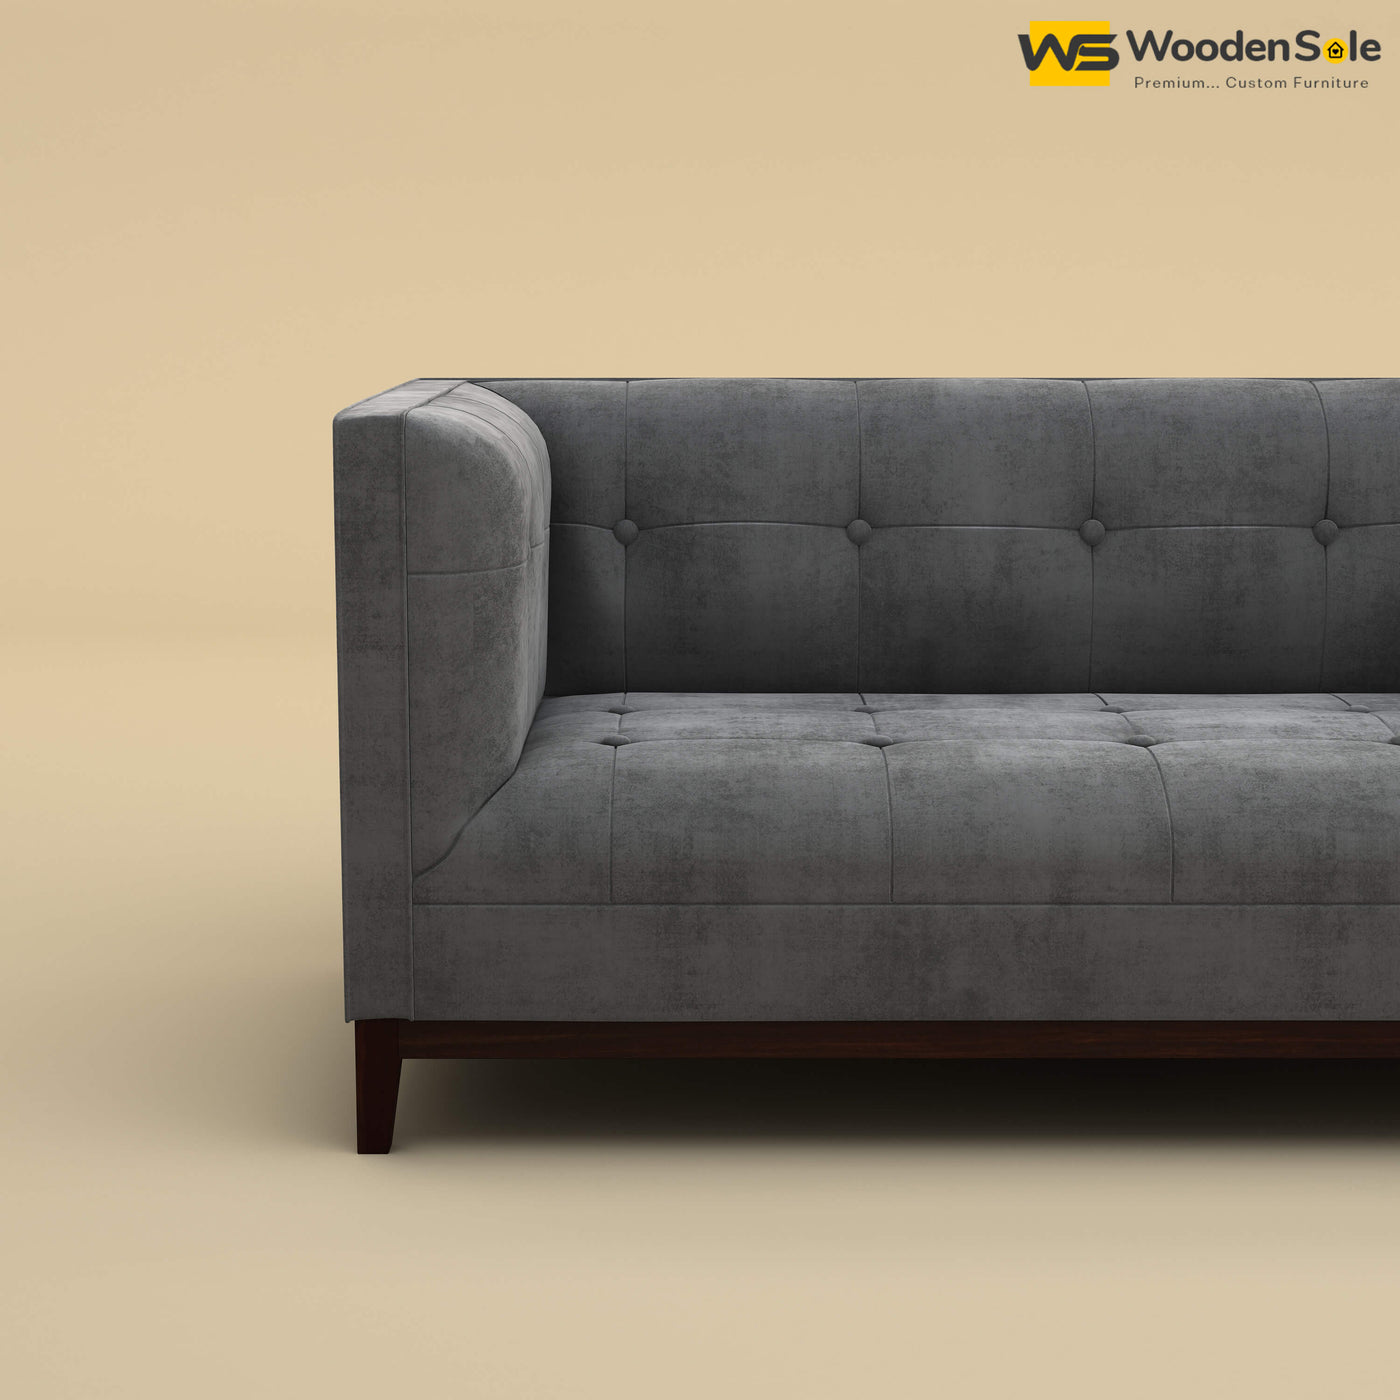 Loren Two Seater Fabric Sofa (Velvet, Charcoal Gray)